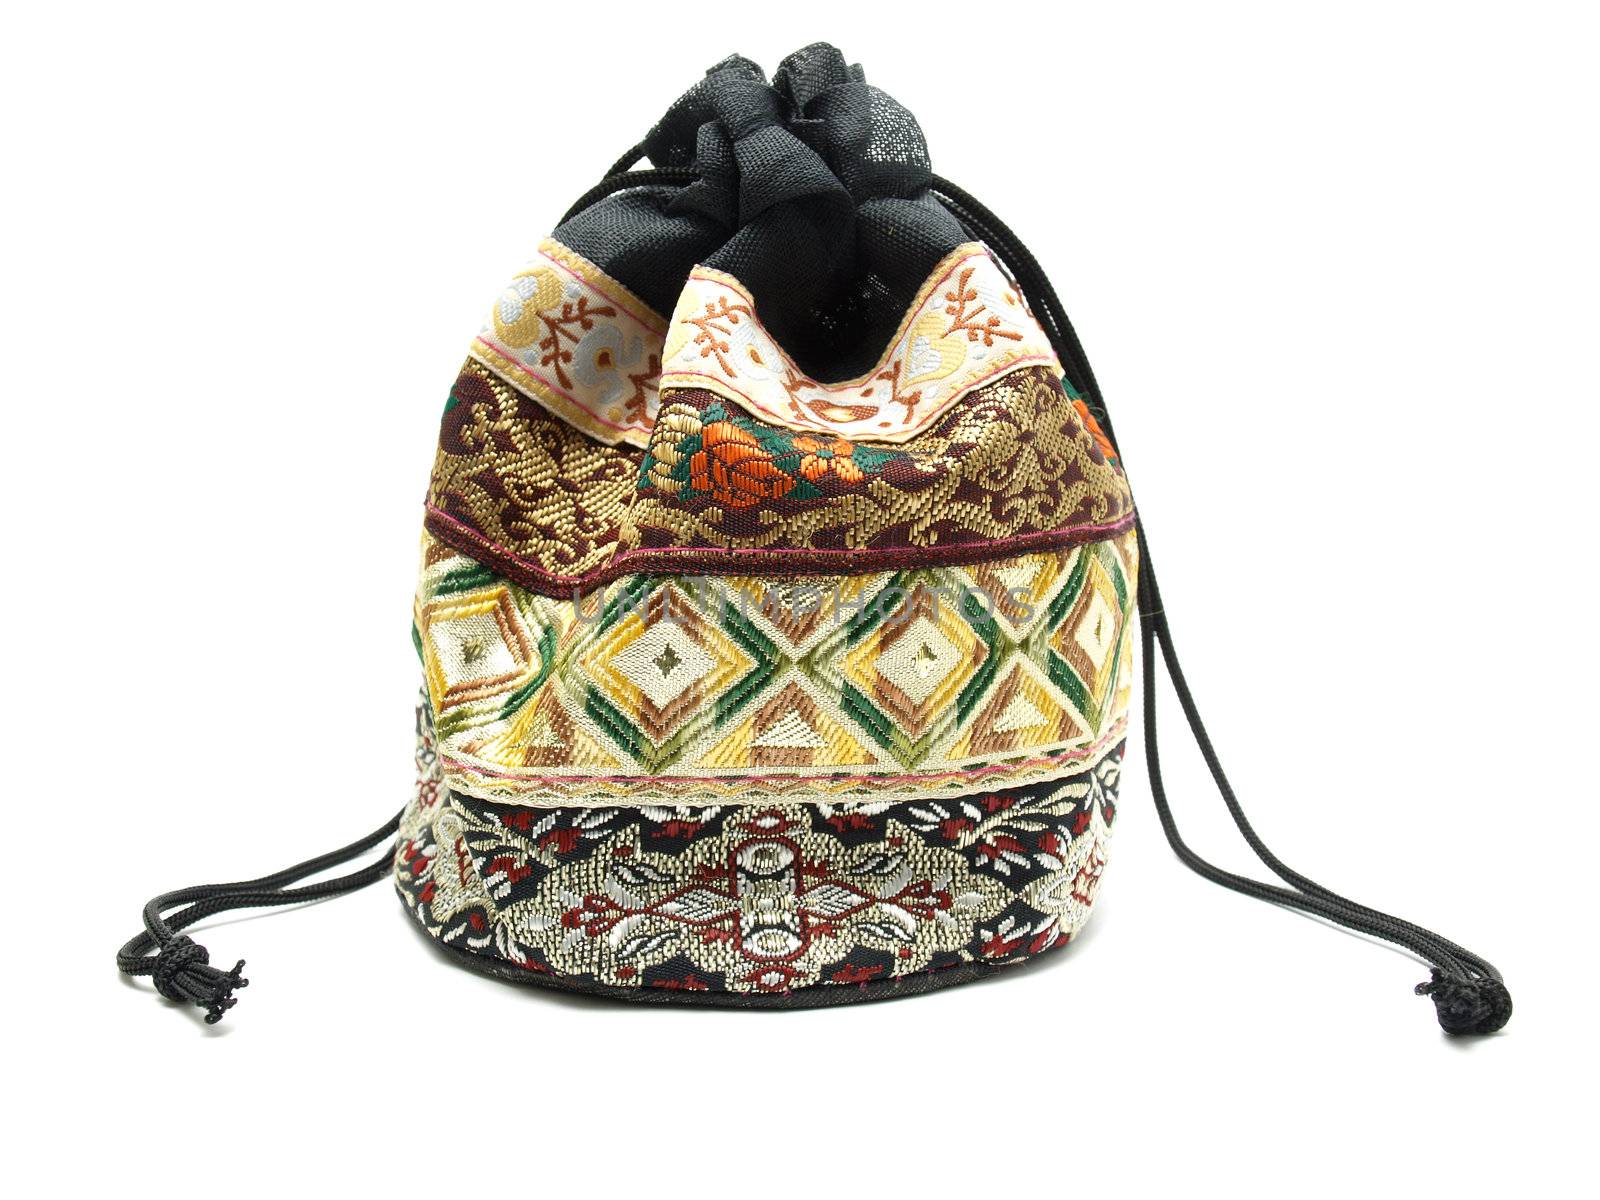 Indian bag by Bedolaga